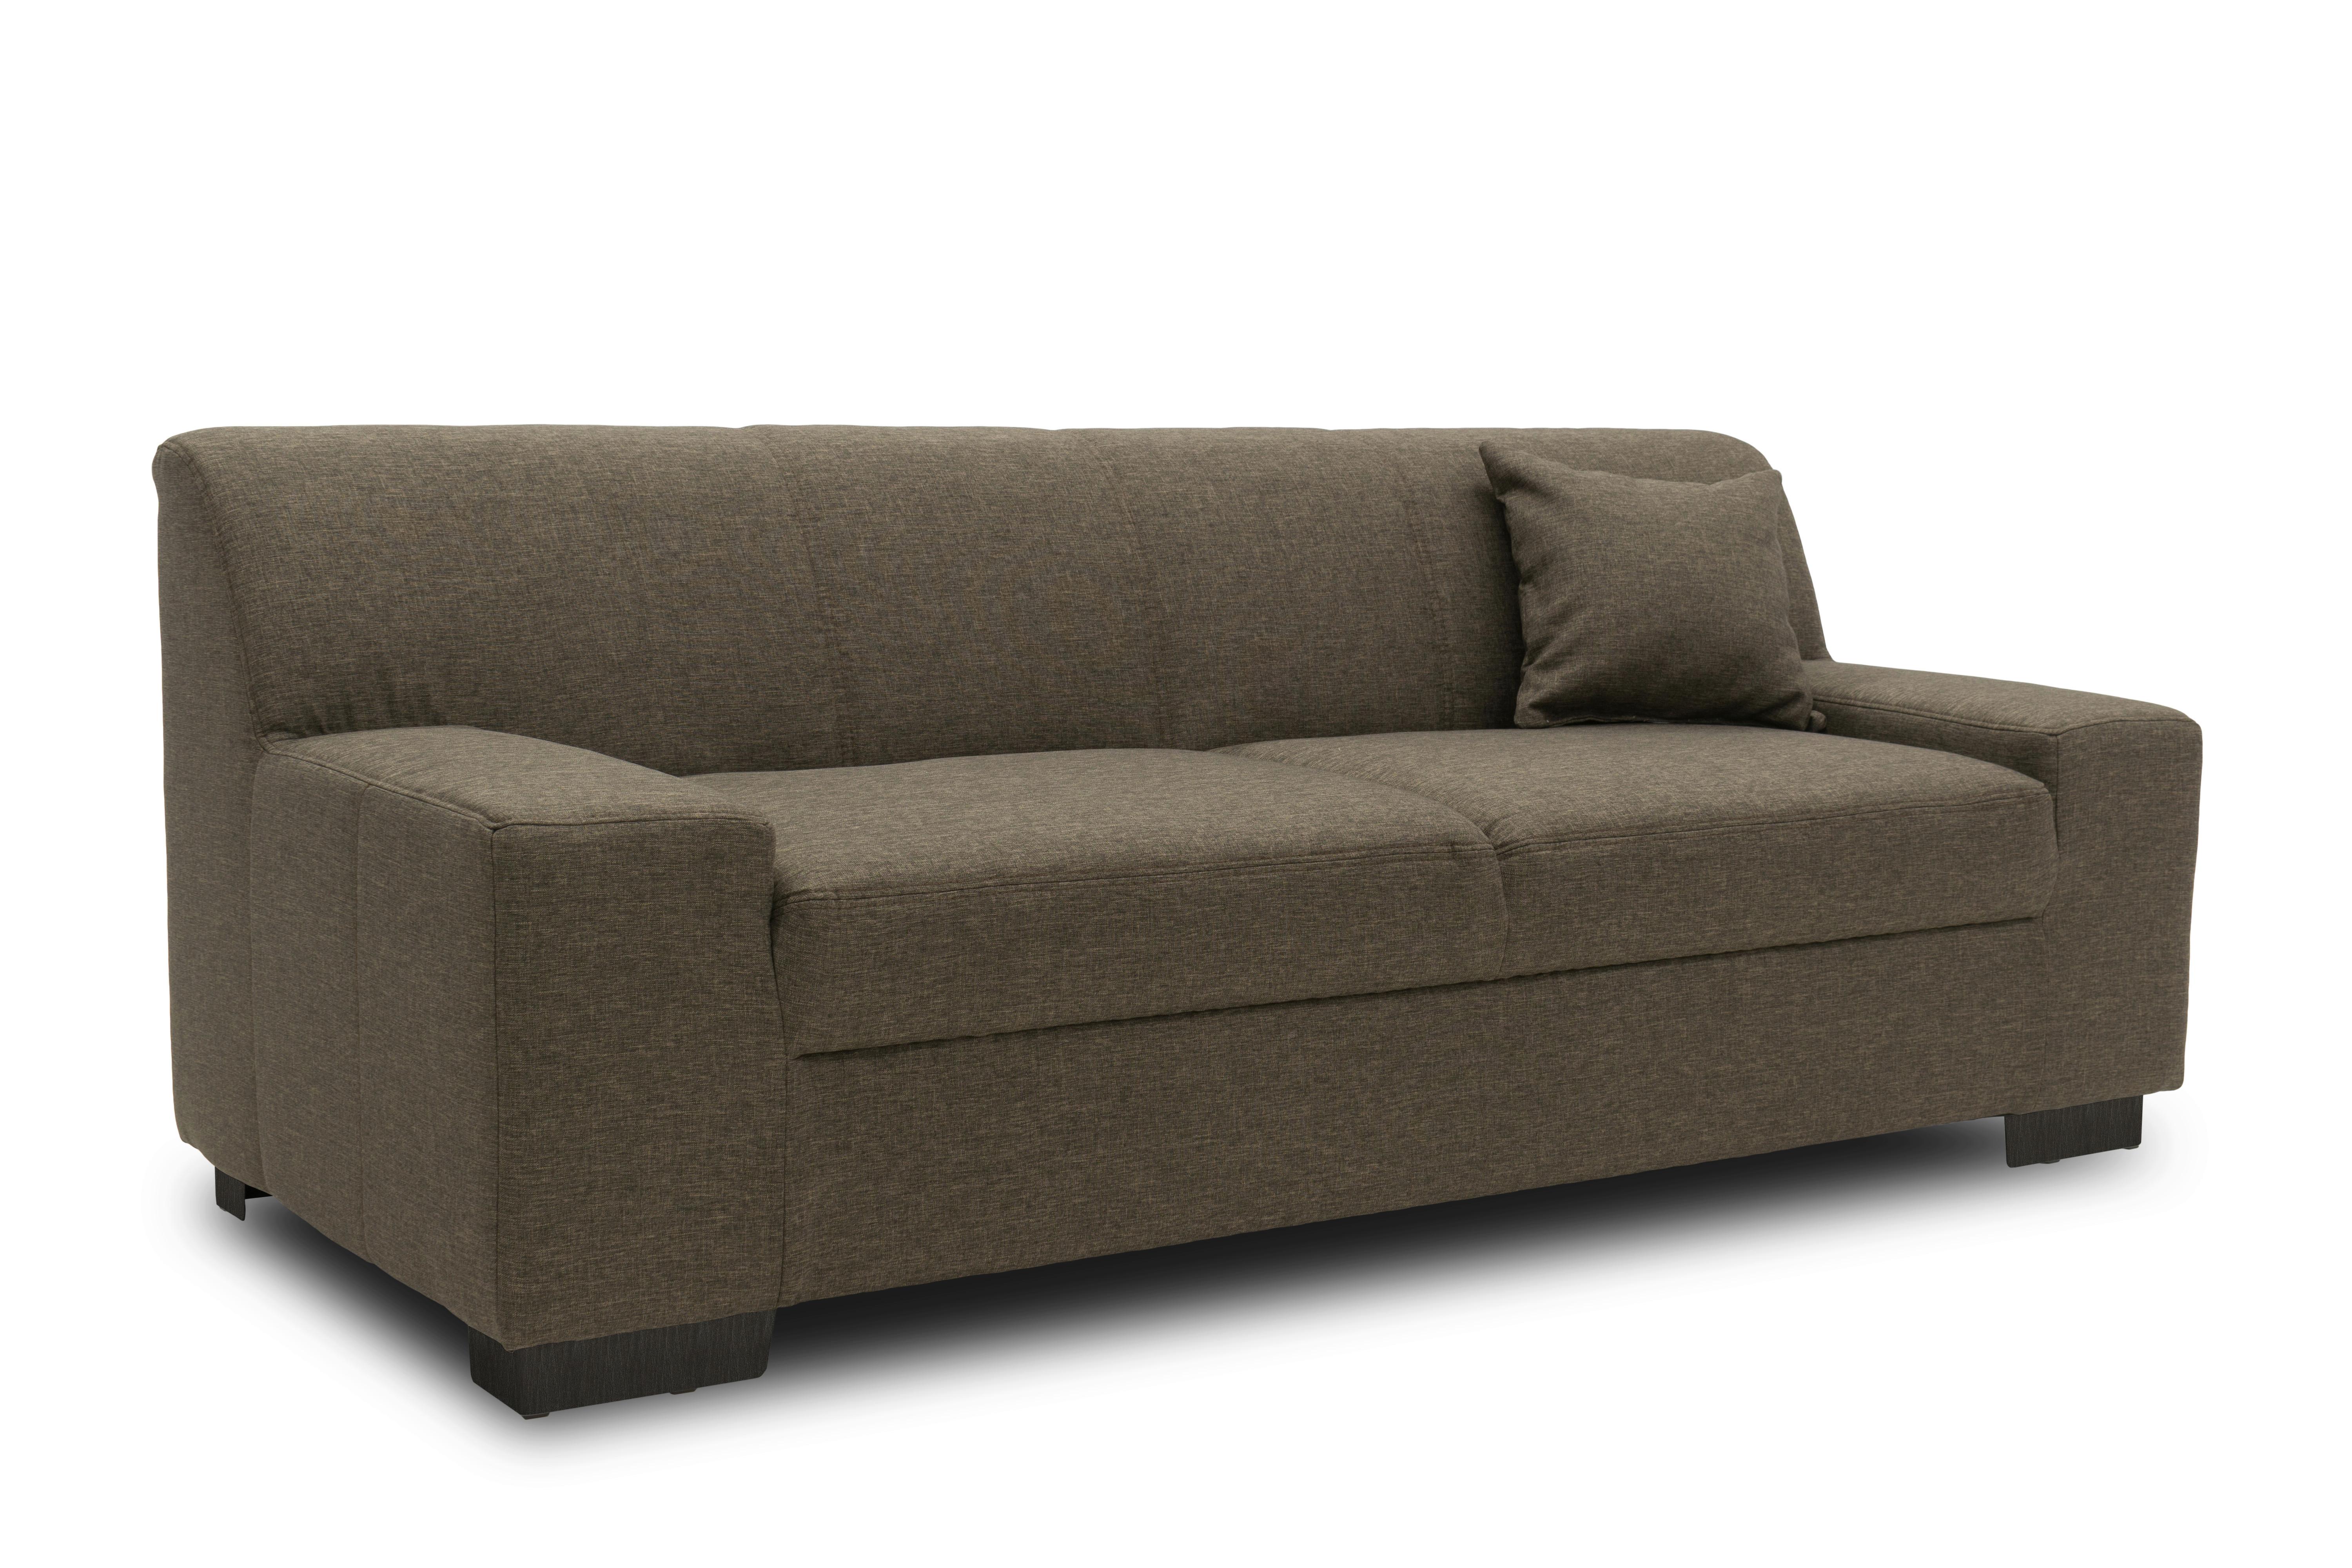 2-Sitzer-Sofa Norma Grau/Braun Webstoff - Wengefarben/Graubraun, Design, Textil (194/74/85cm) - MID.YOU